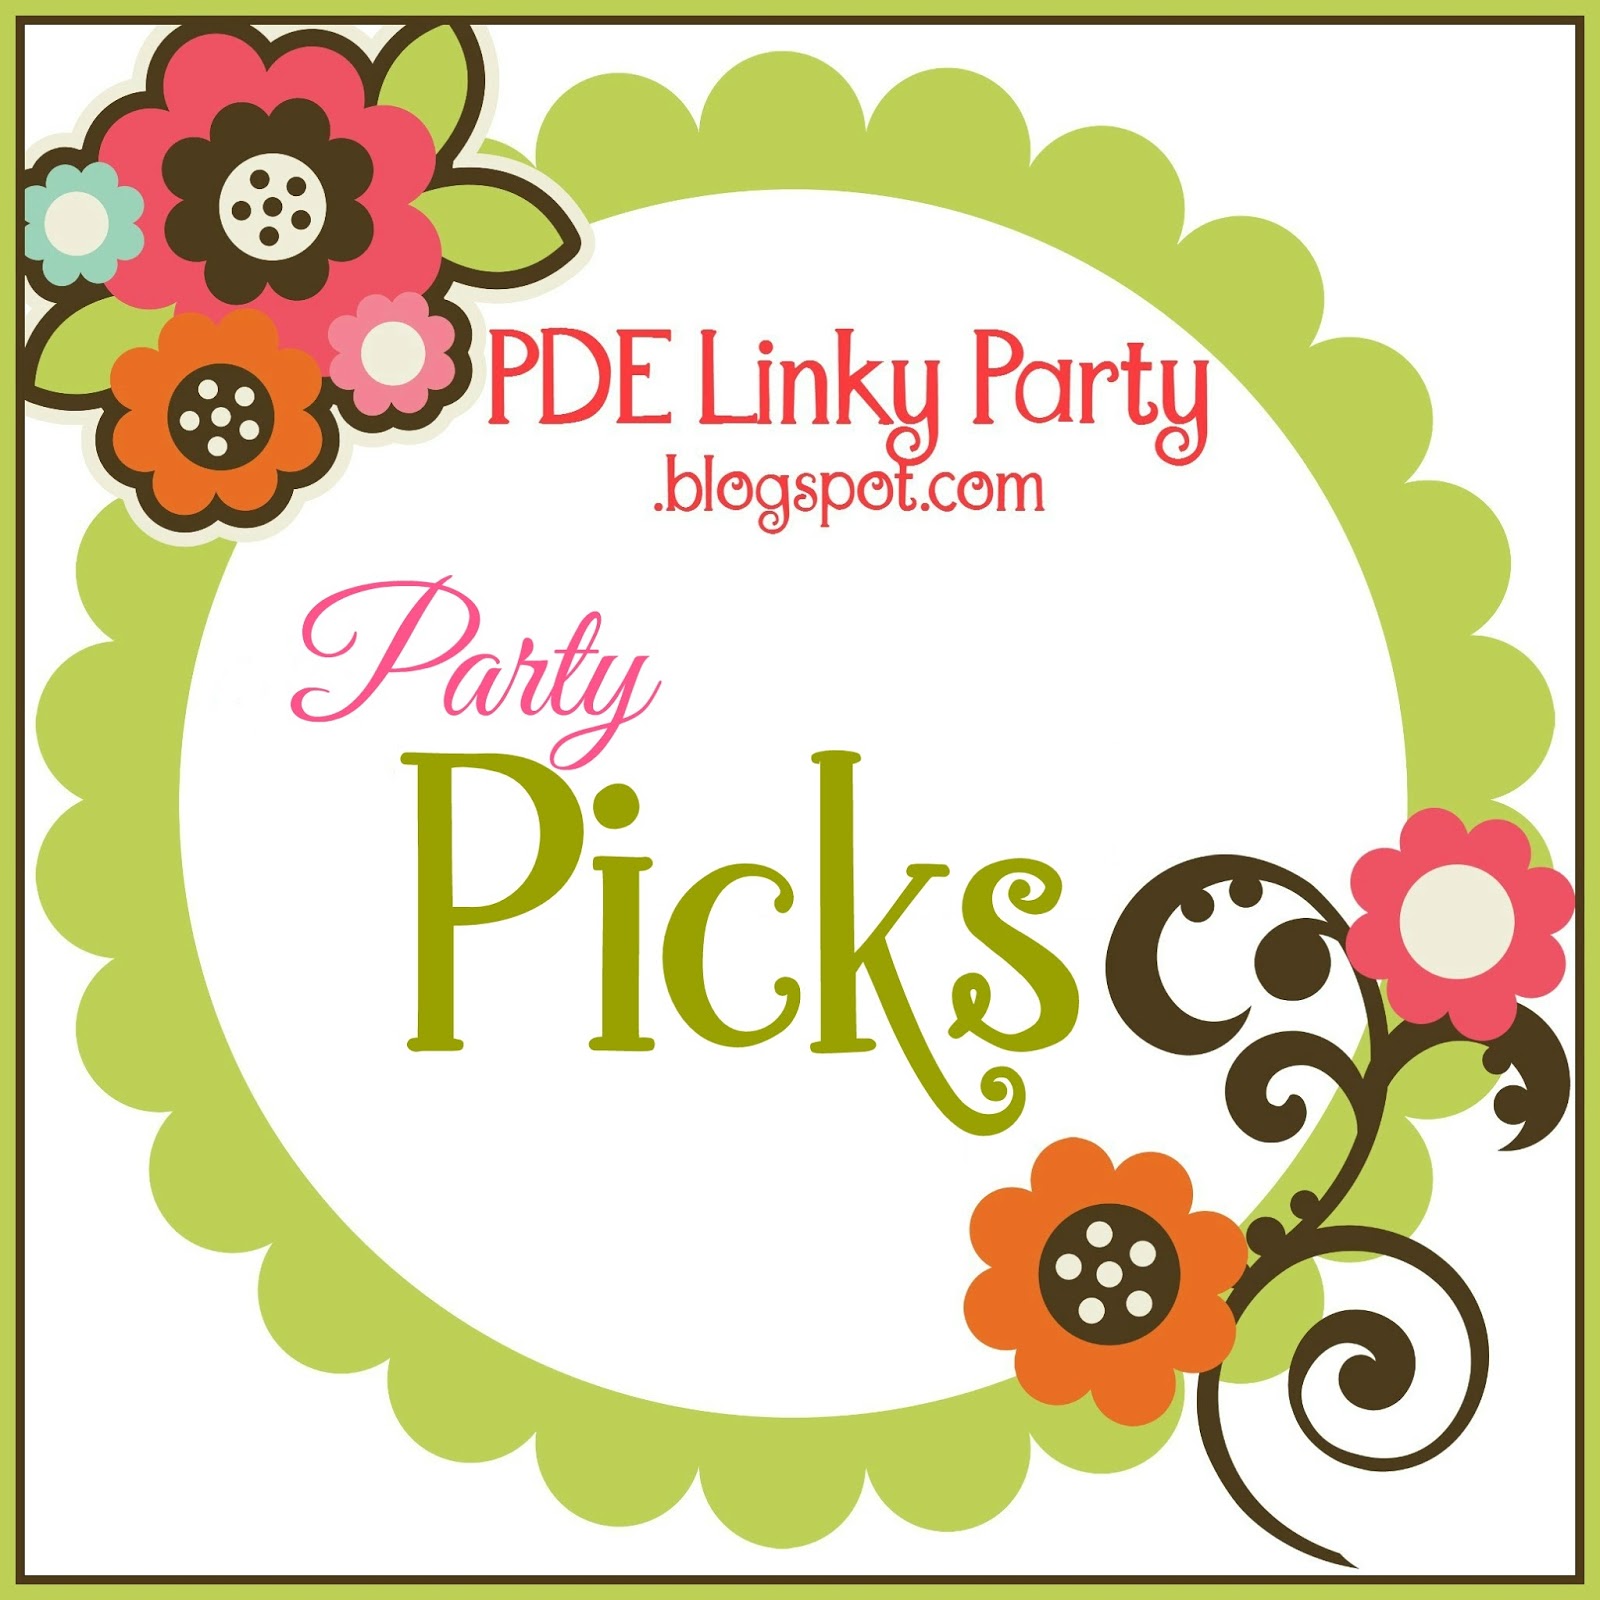 PDE Linky Party Picks